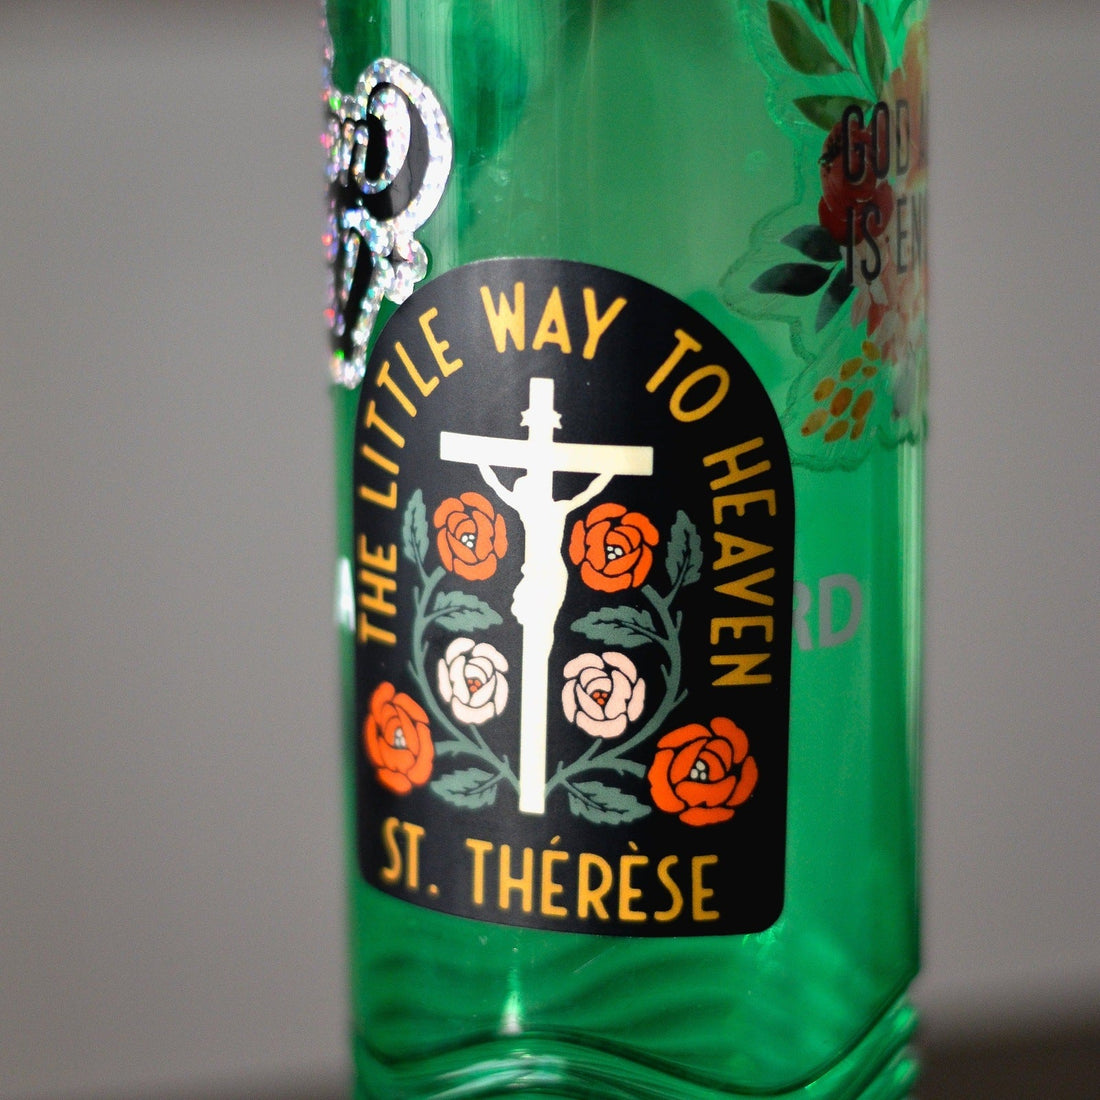 St. Thérèse Catholic Sticker - Little Way Design Co.